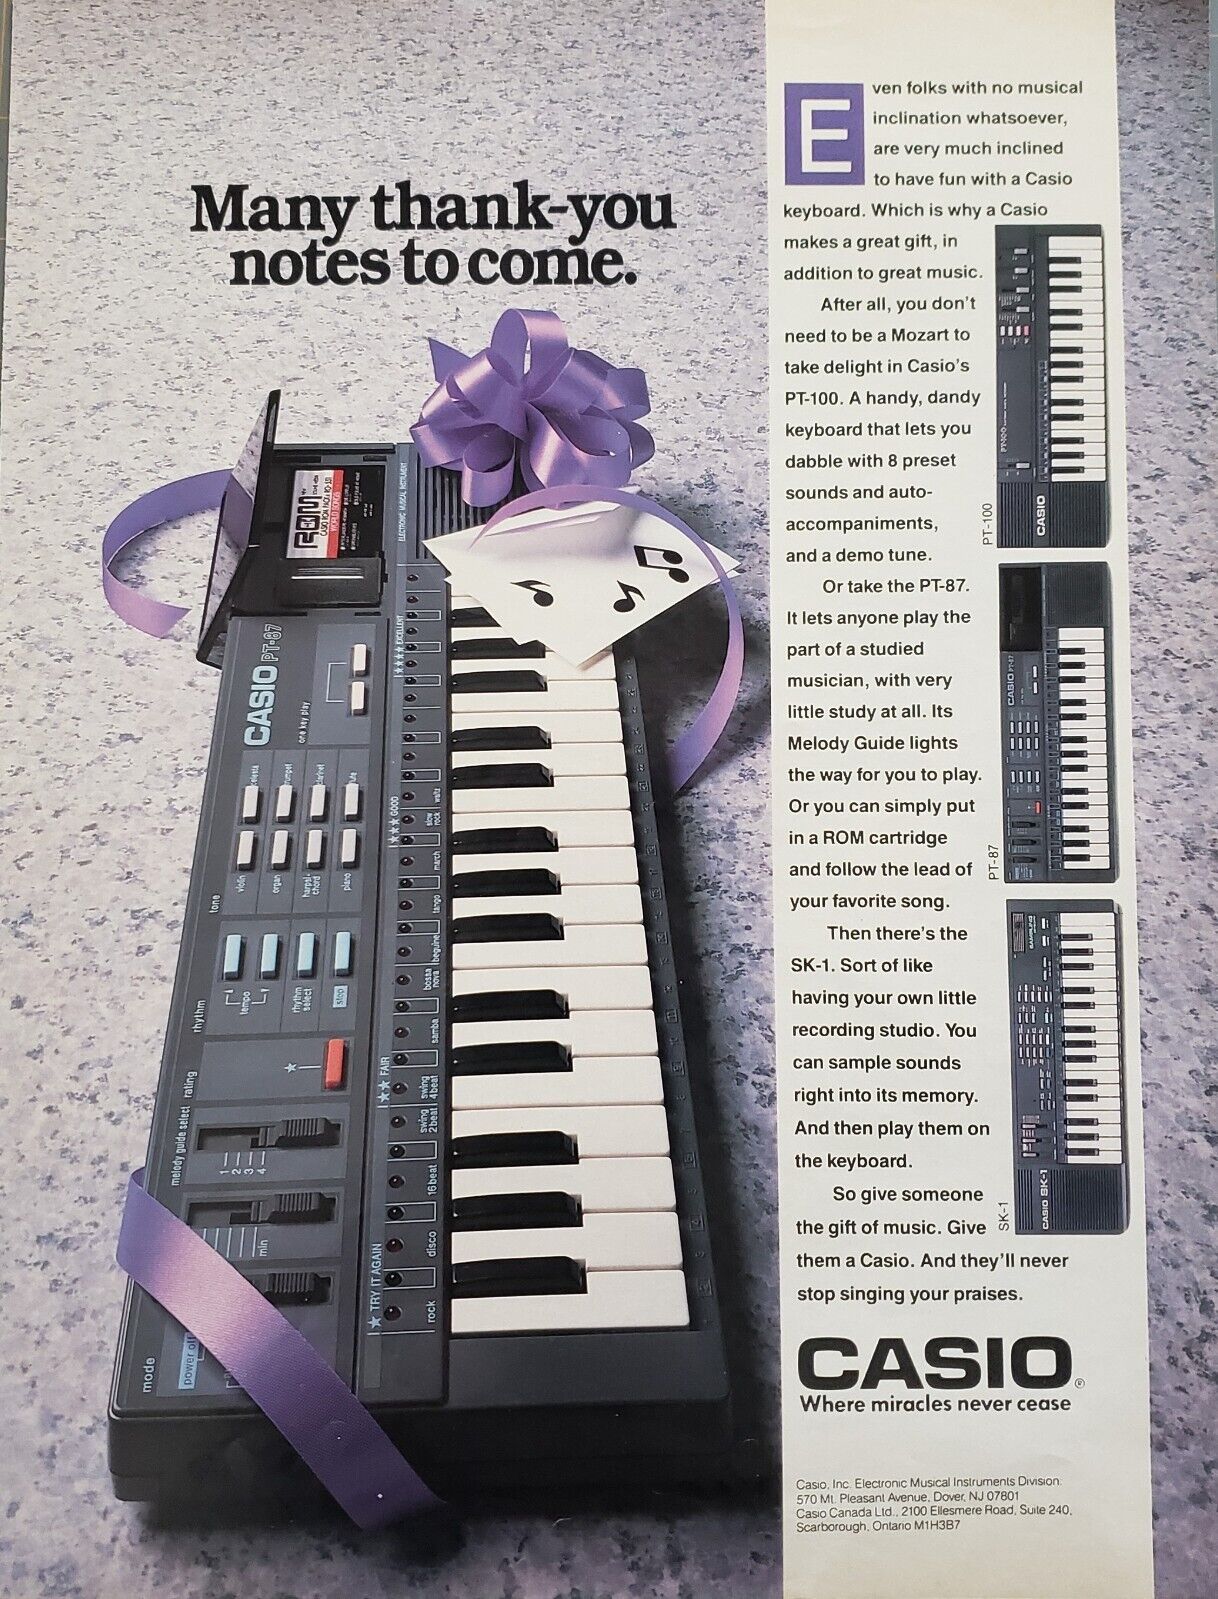 1988 Casio Keyboard 8 Preset Sounds & Auto Accomplishments Demo Tune Print Ad